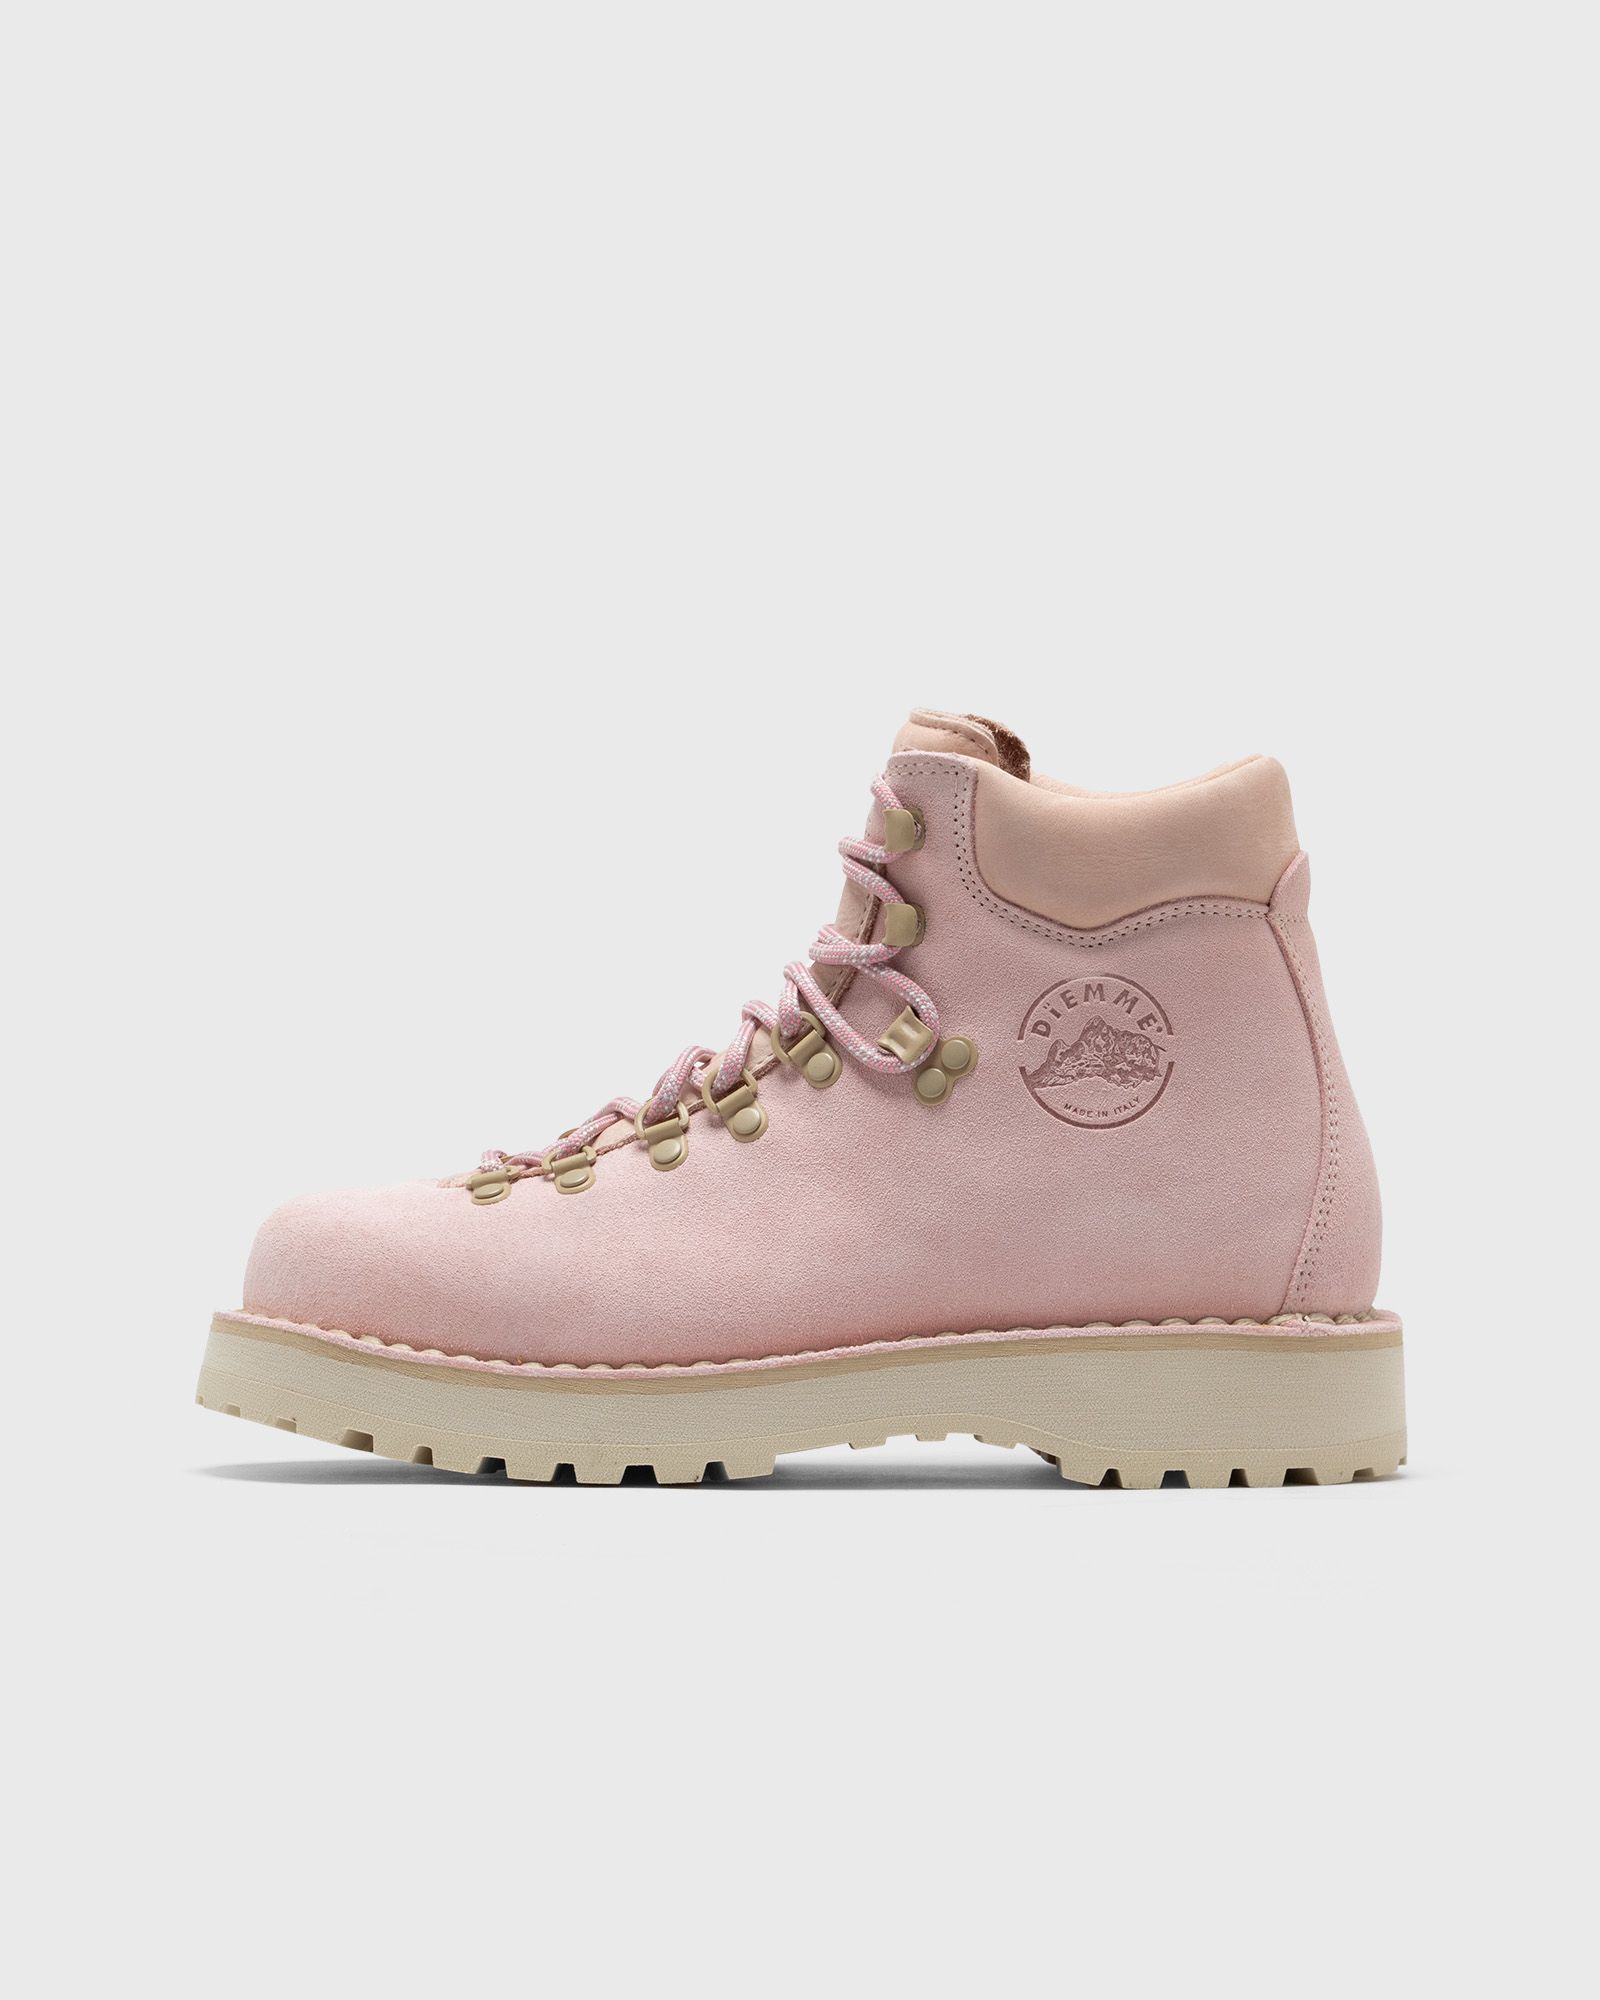 DIEMME - roccia vet women boots pink in größe:41